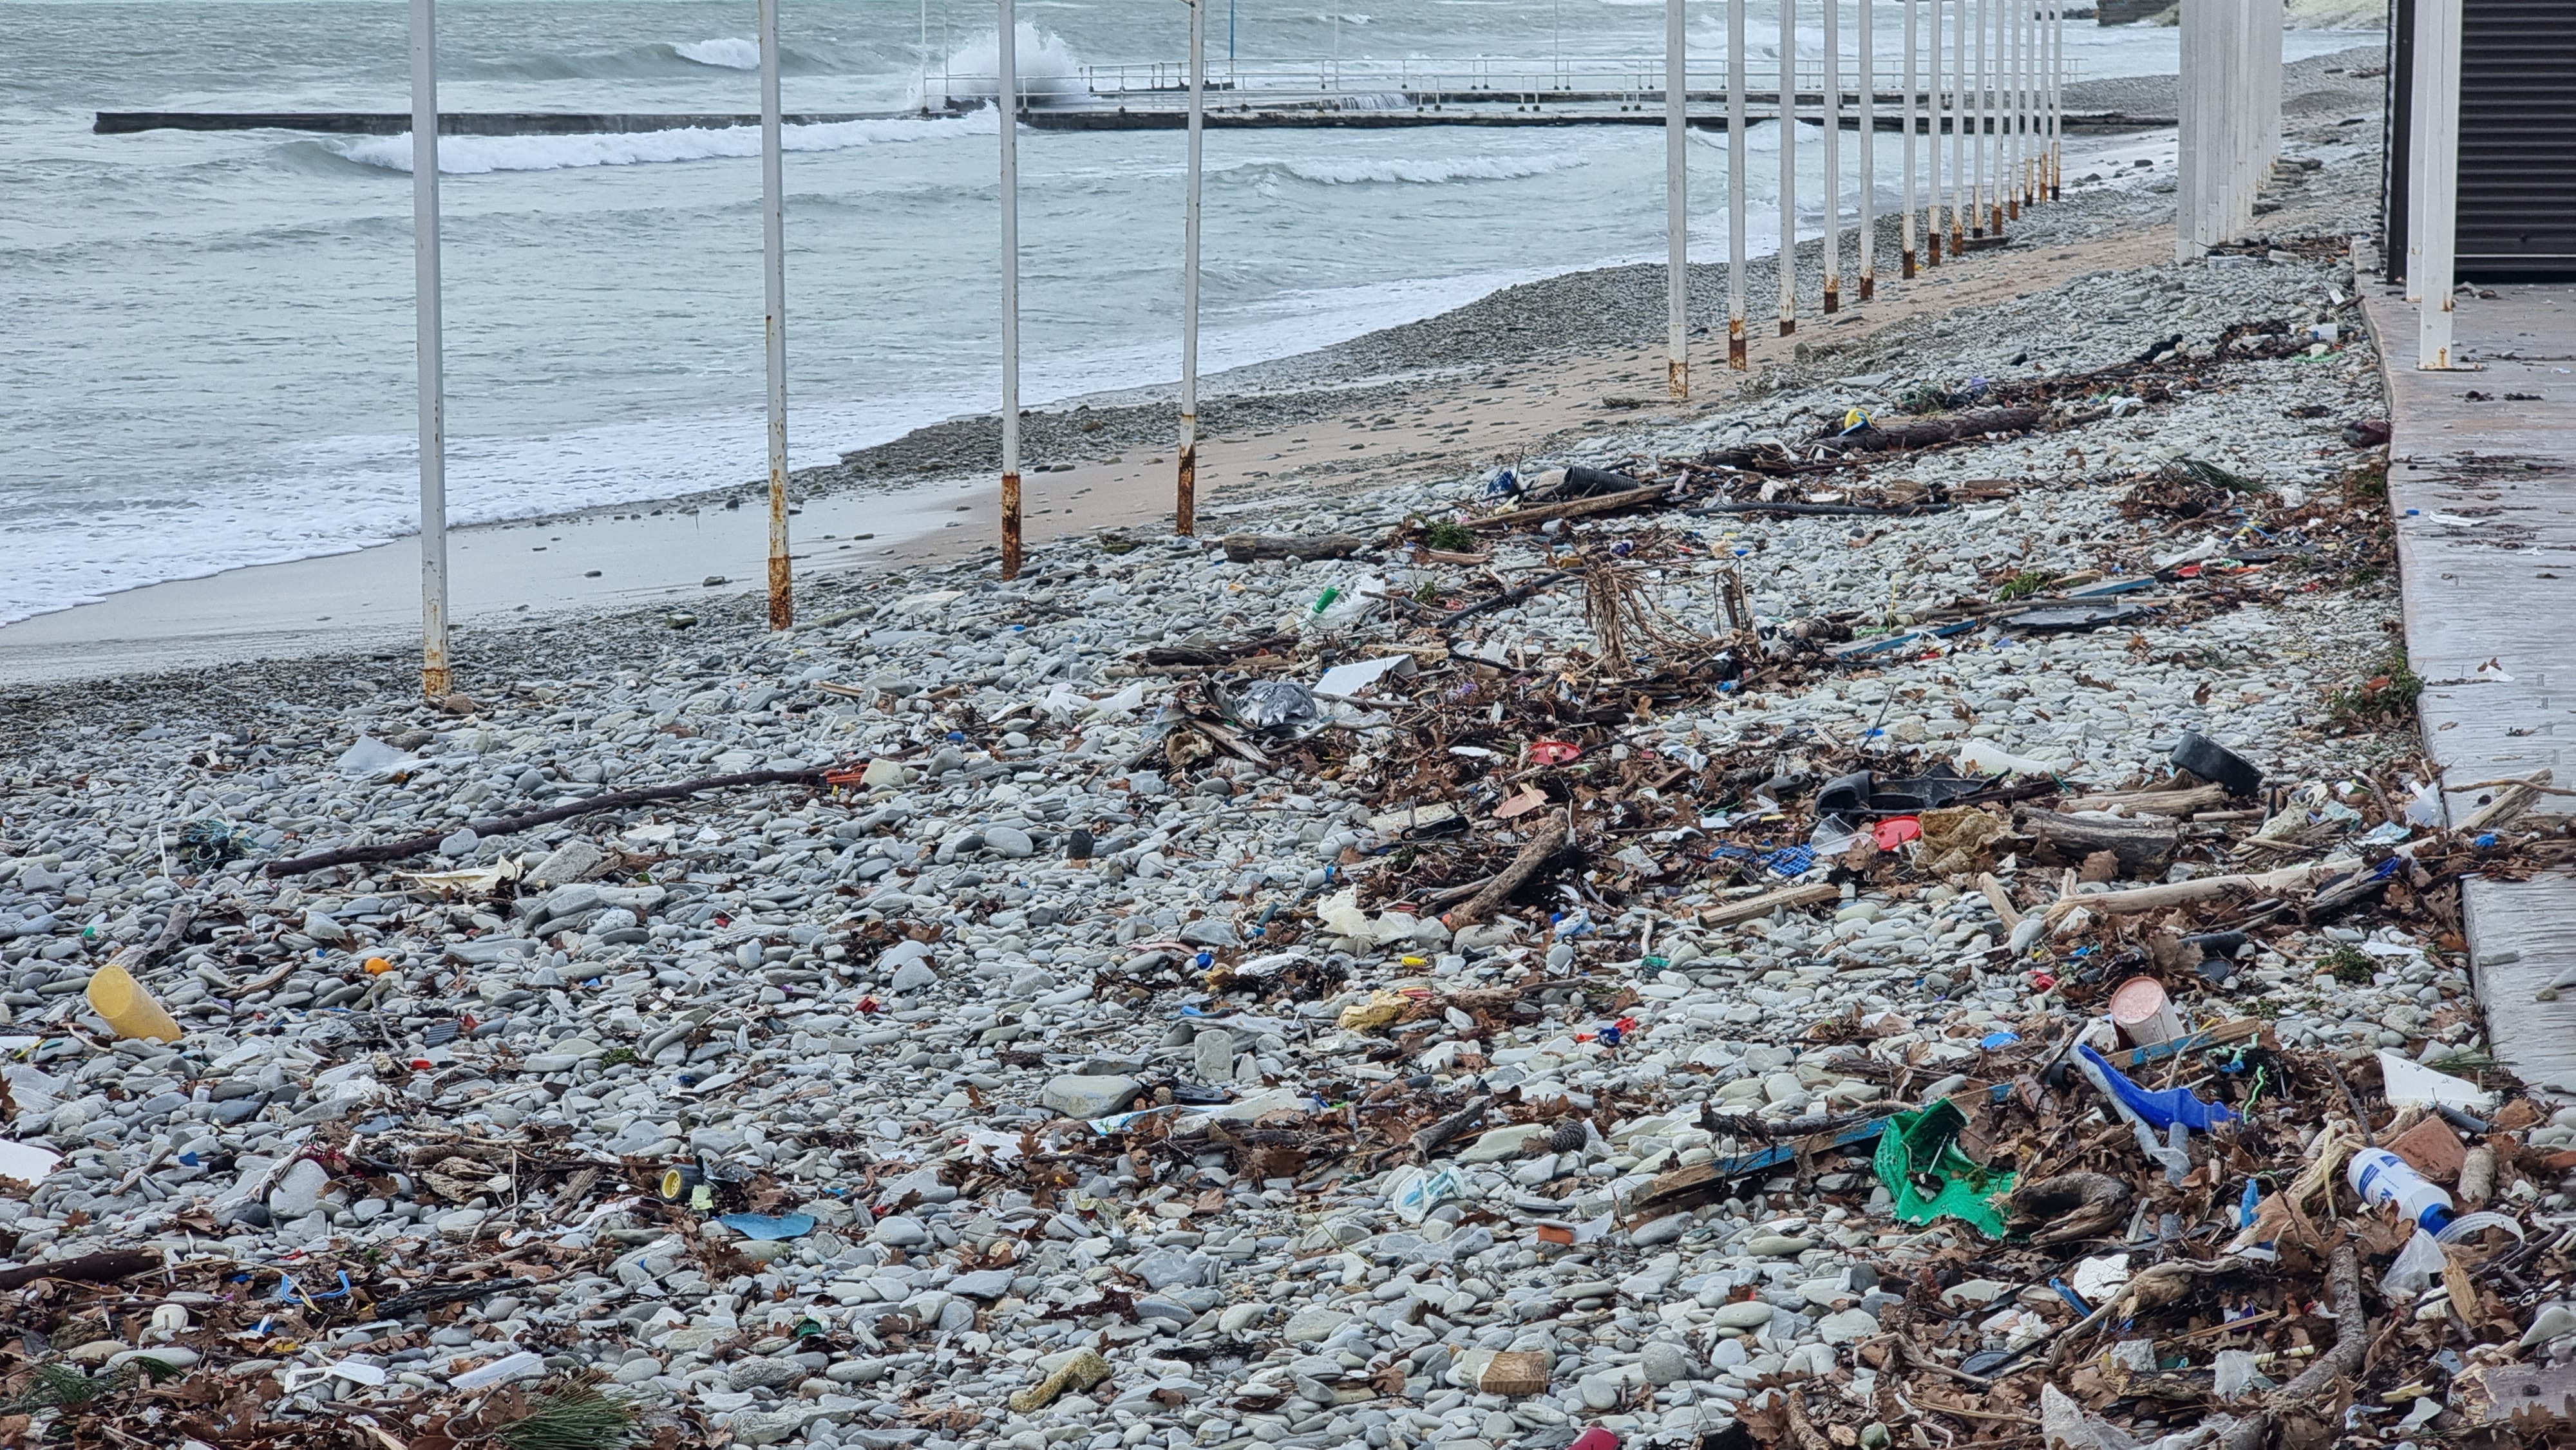 Пляж после шторма. Берег после шторма. Берег заваленный мусором.